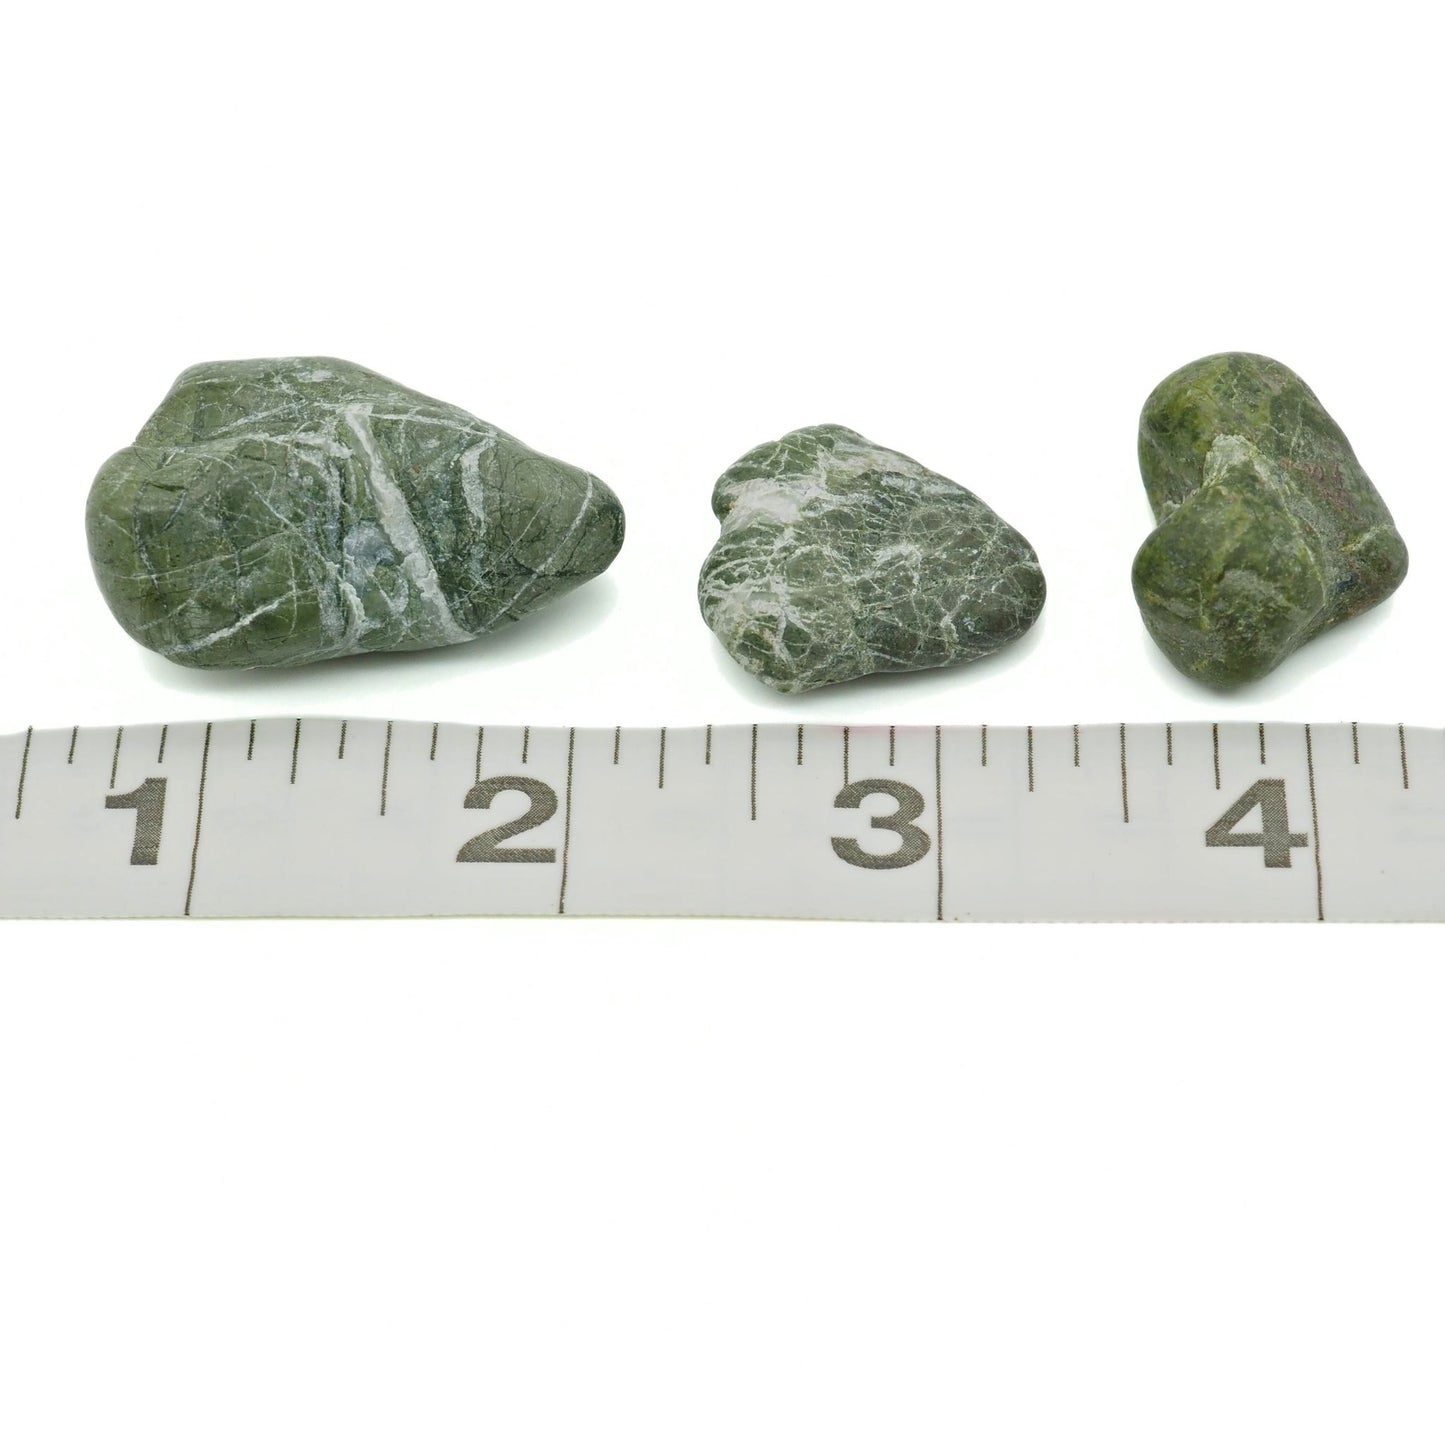 Three heart shaped jade beach stones tape measure